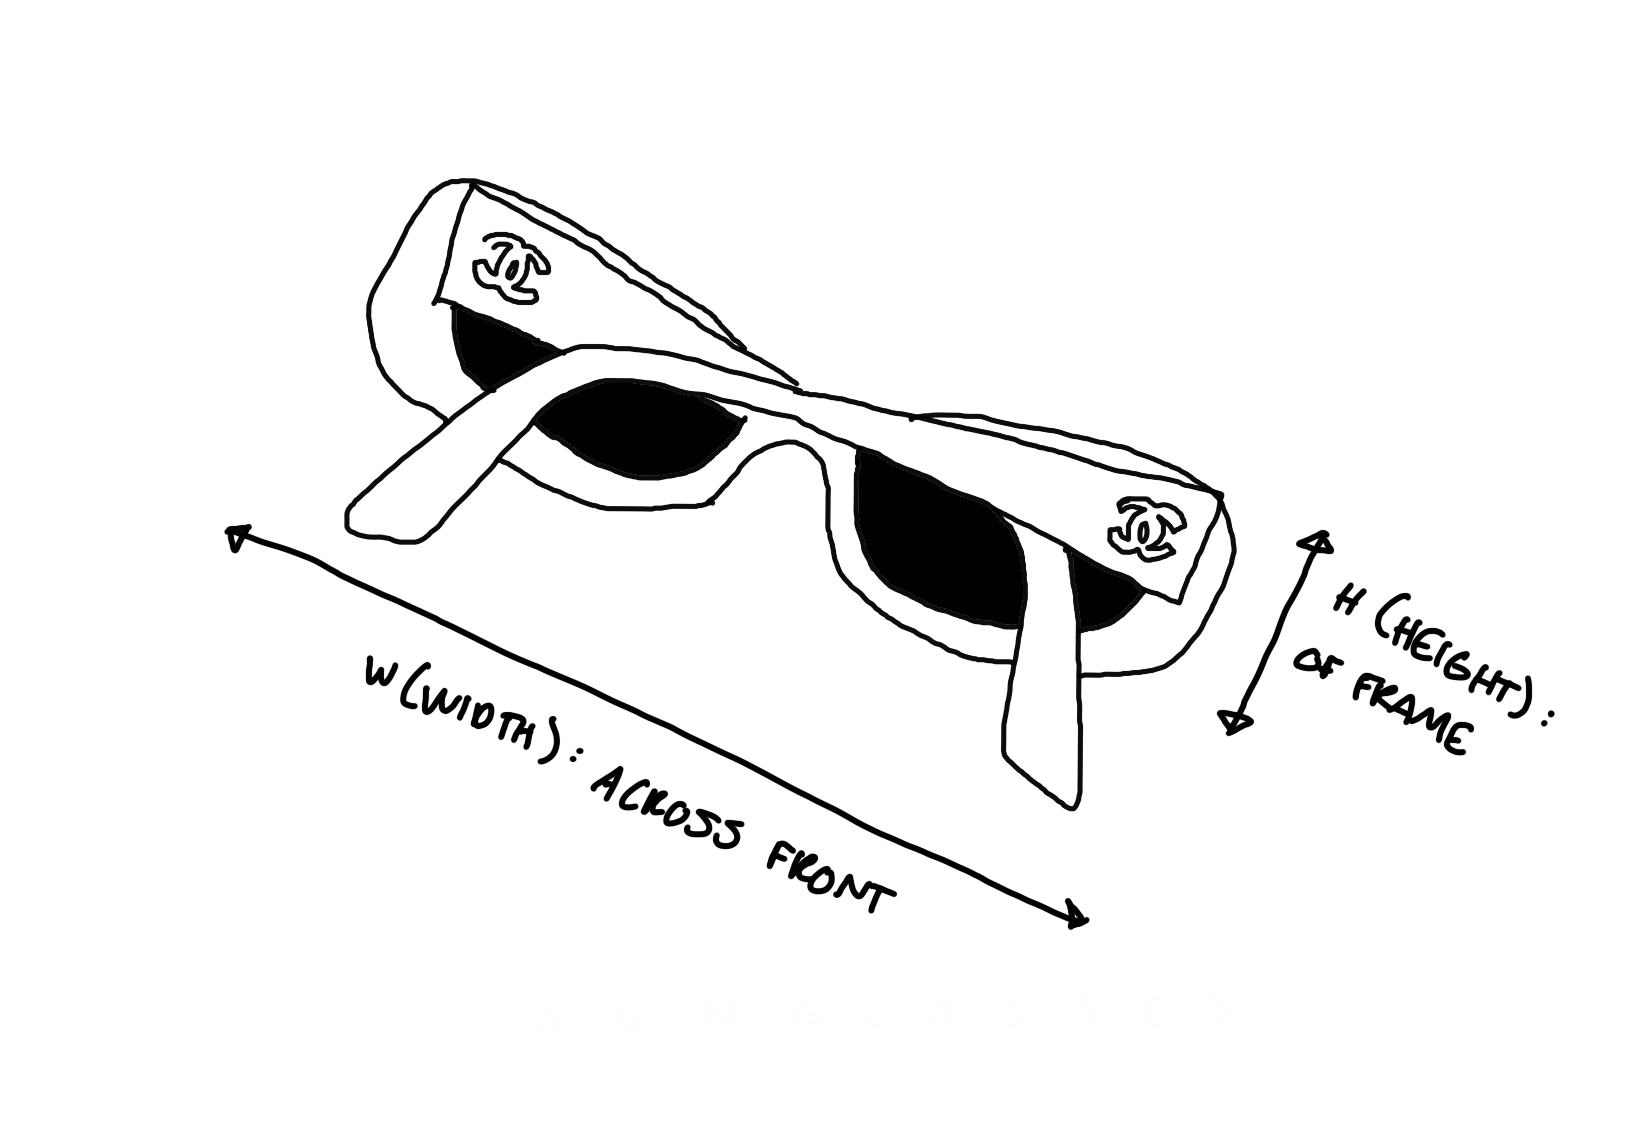 Chanel Black Quilted Rhinestone Micro Sunglasses